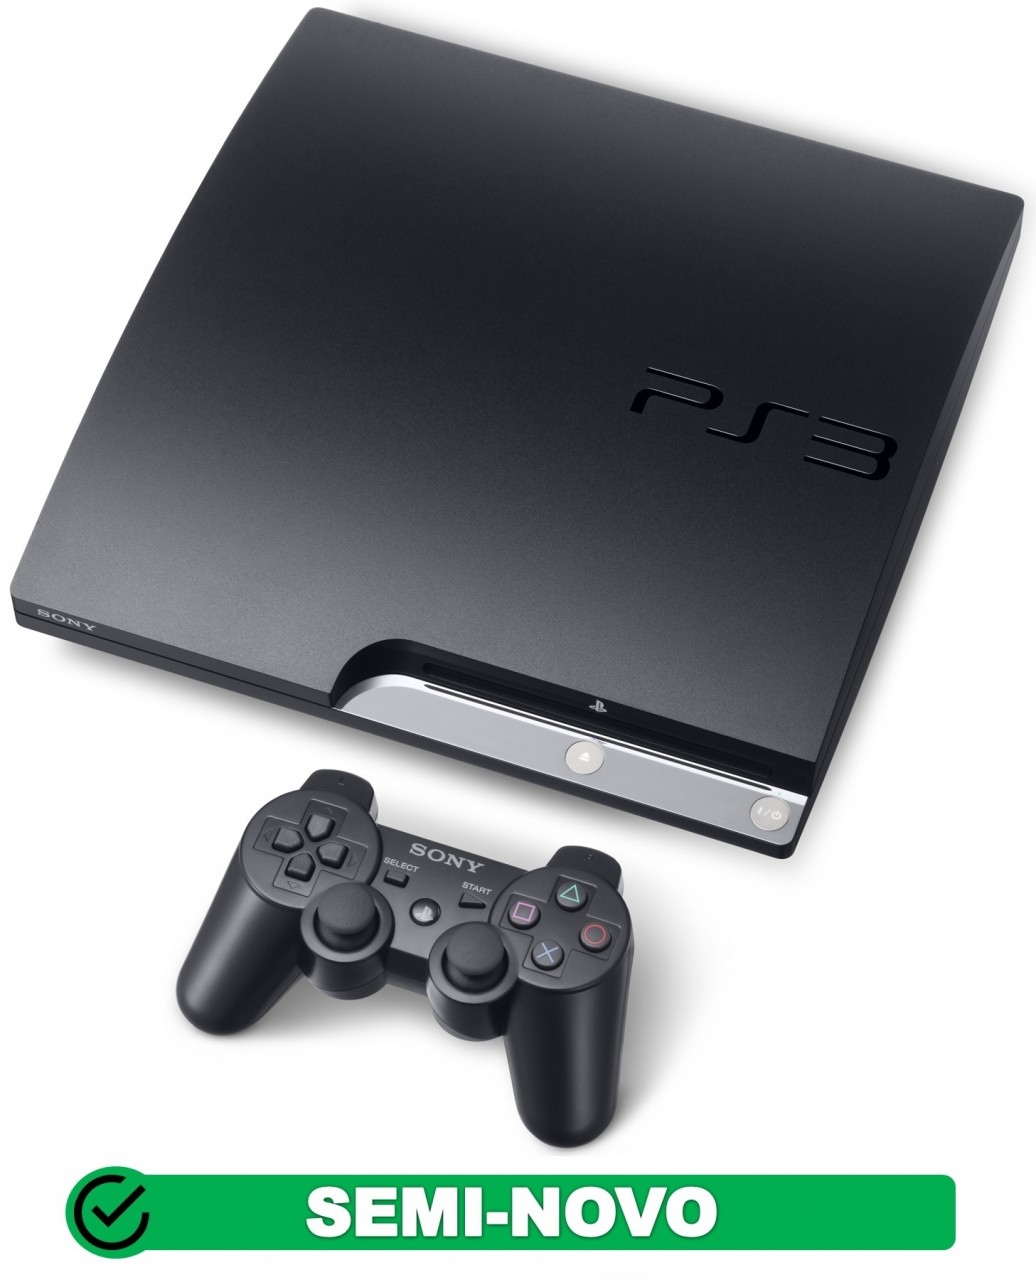 Console Sony PS3 Playstation 3 Slim 160GB com 1 Controle sem Fio e, games playstation  3 